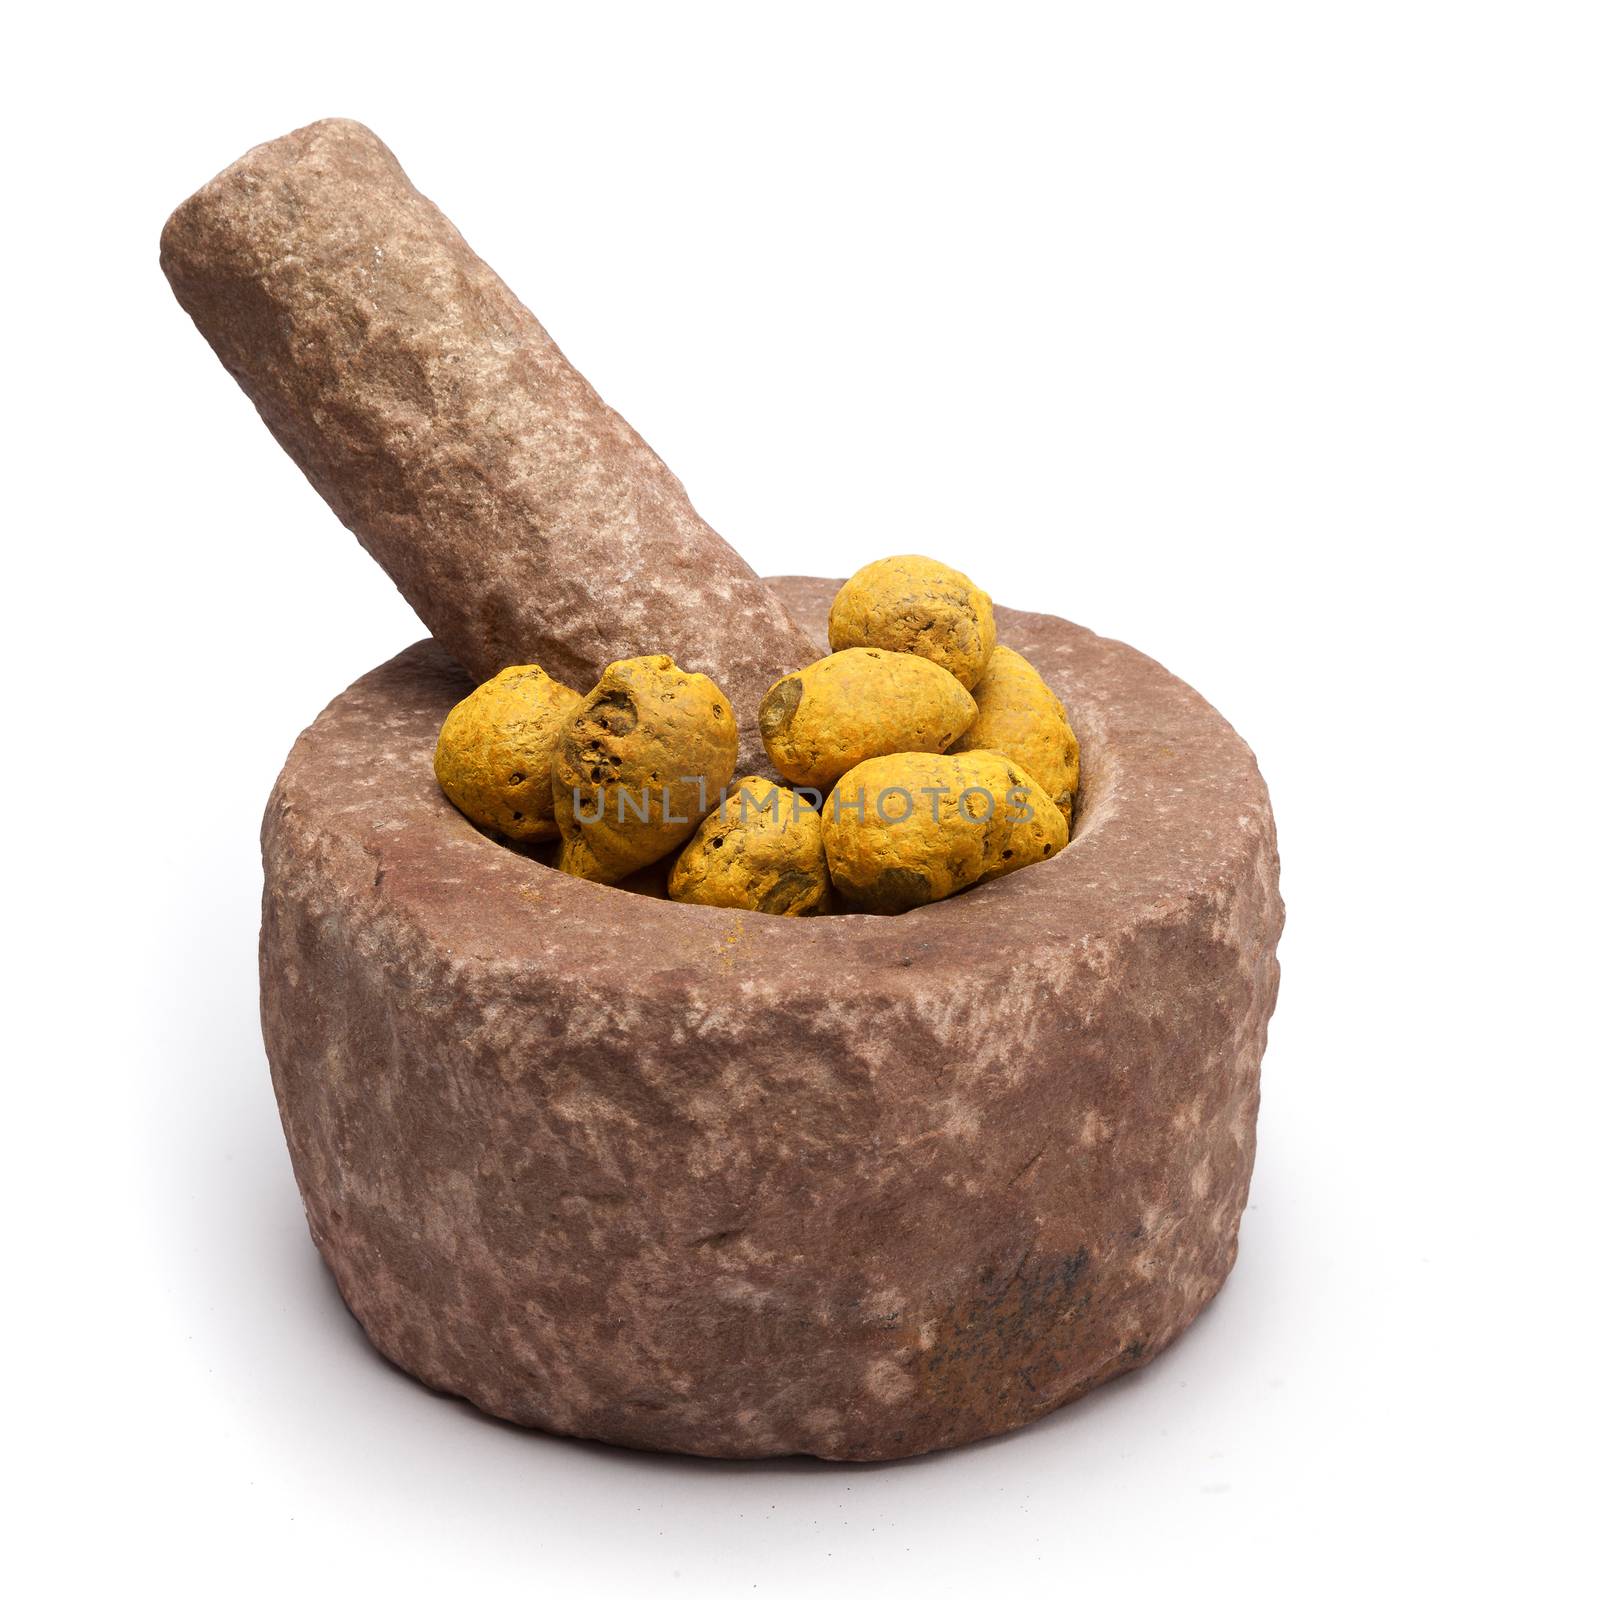 Organic Round Turmeric or Haldi (Curcuma longa) in mortar with pestle, isolated on white background.